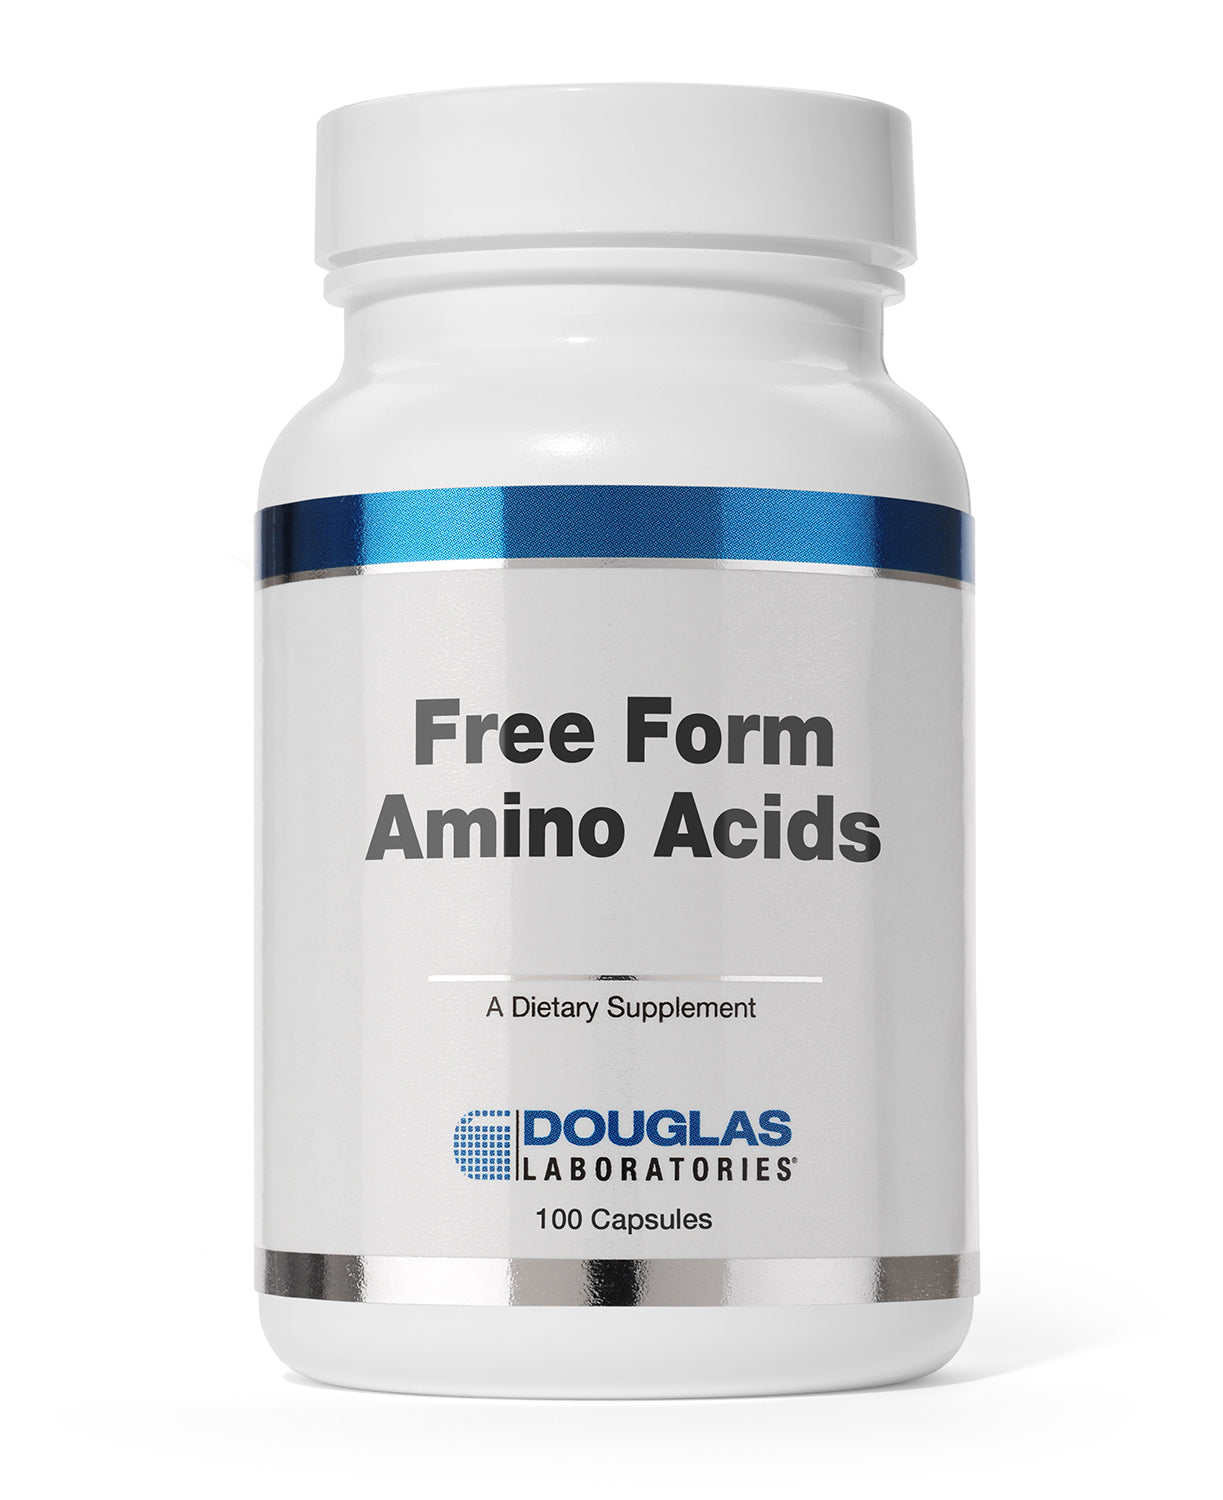 FREE FORM AMINO ACIDS - Douglas Laboratories